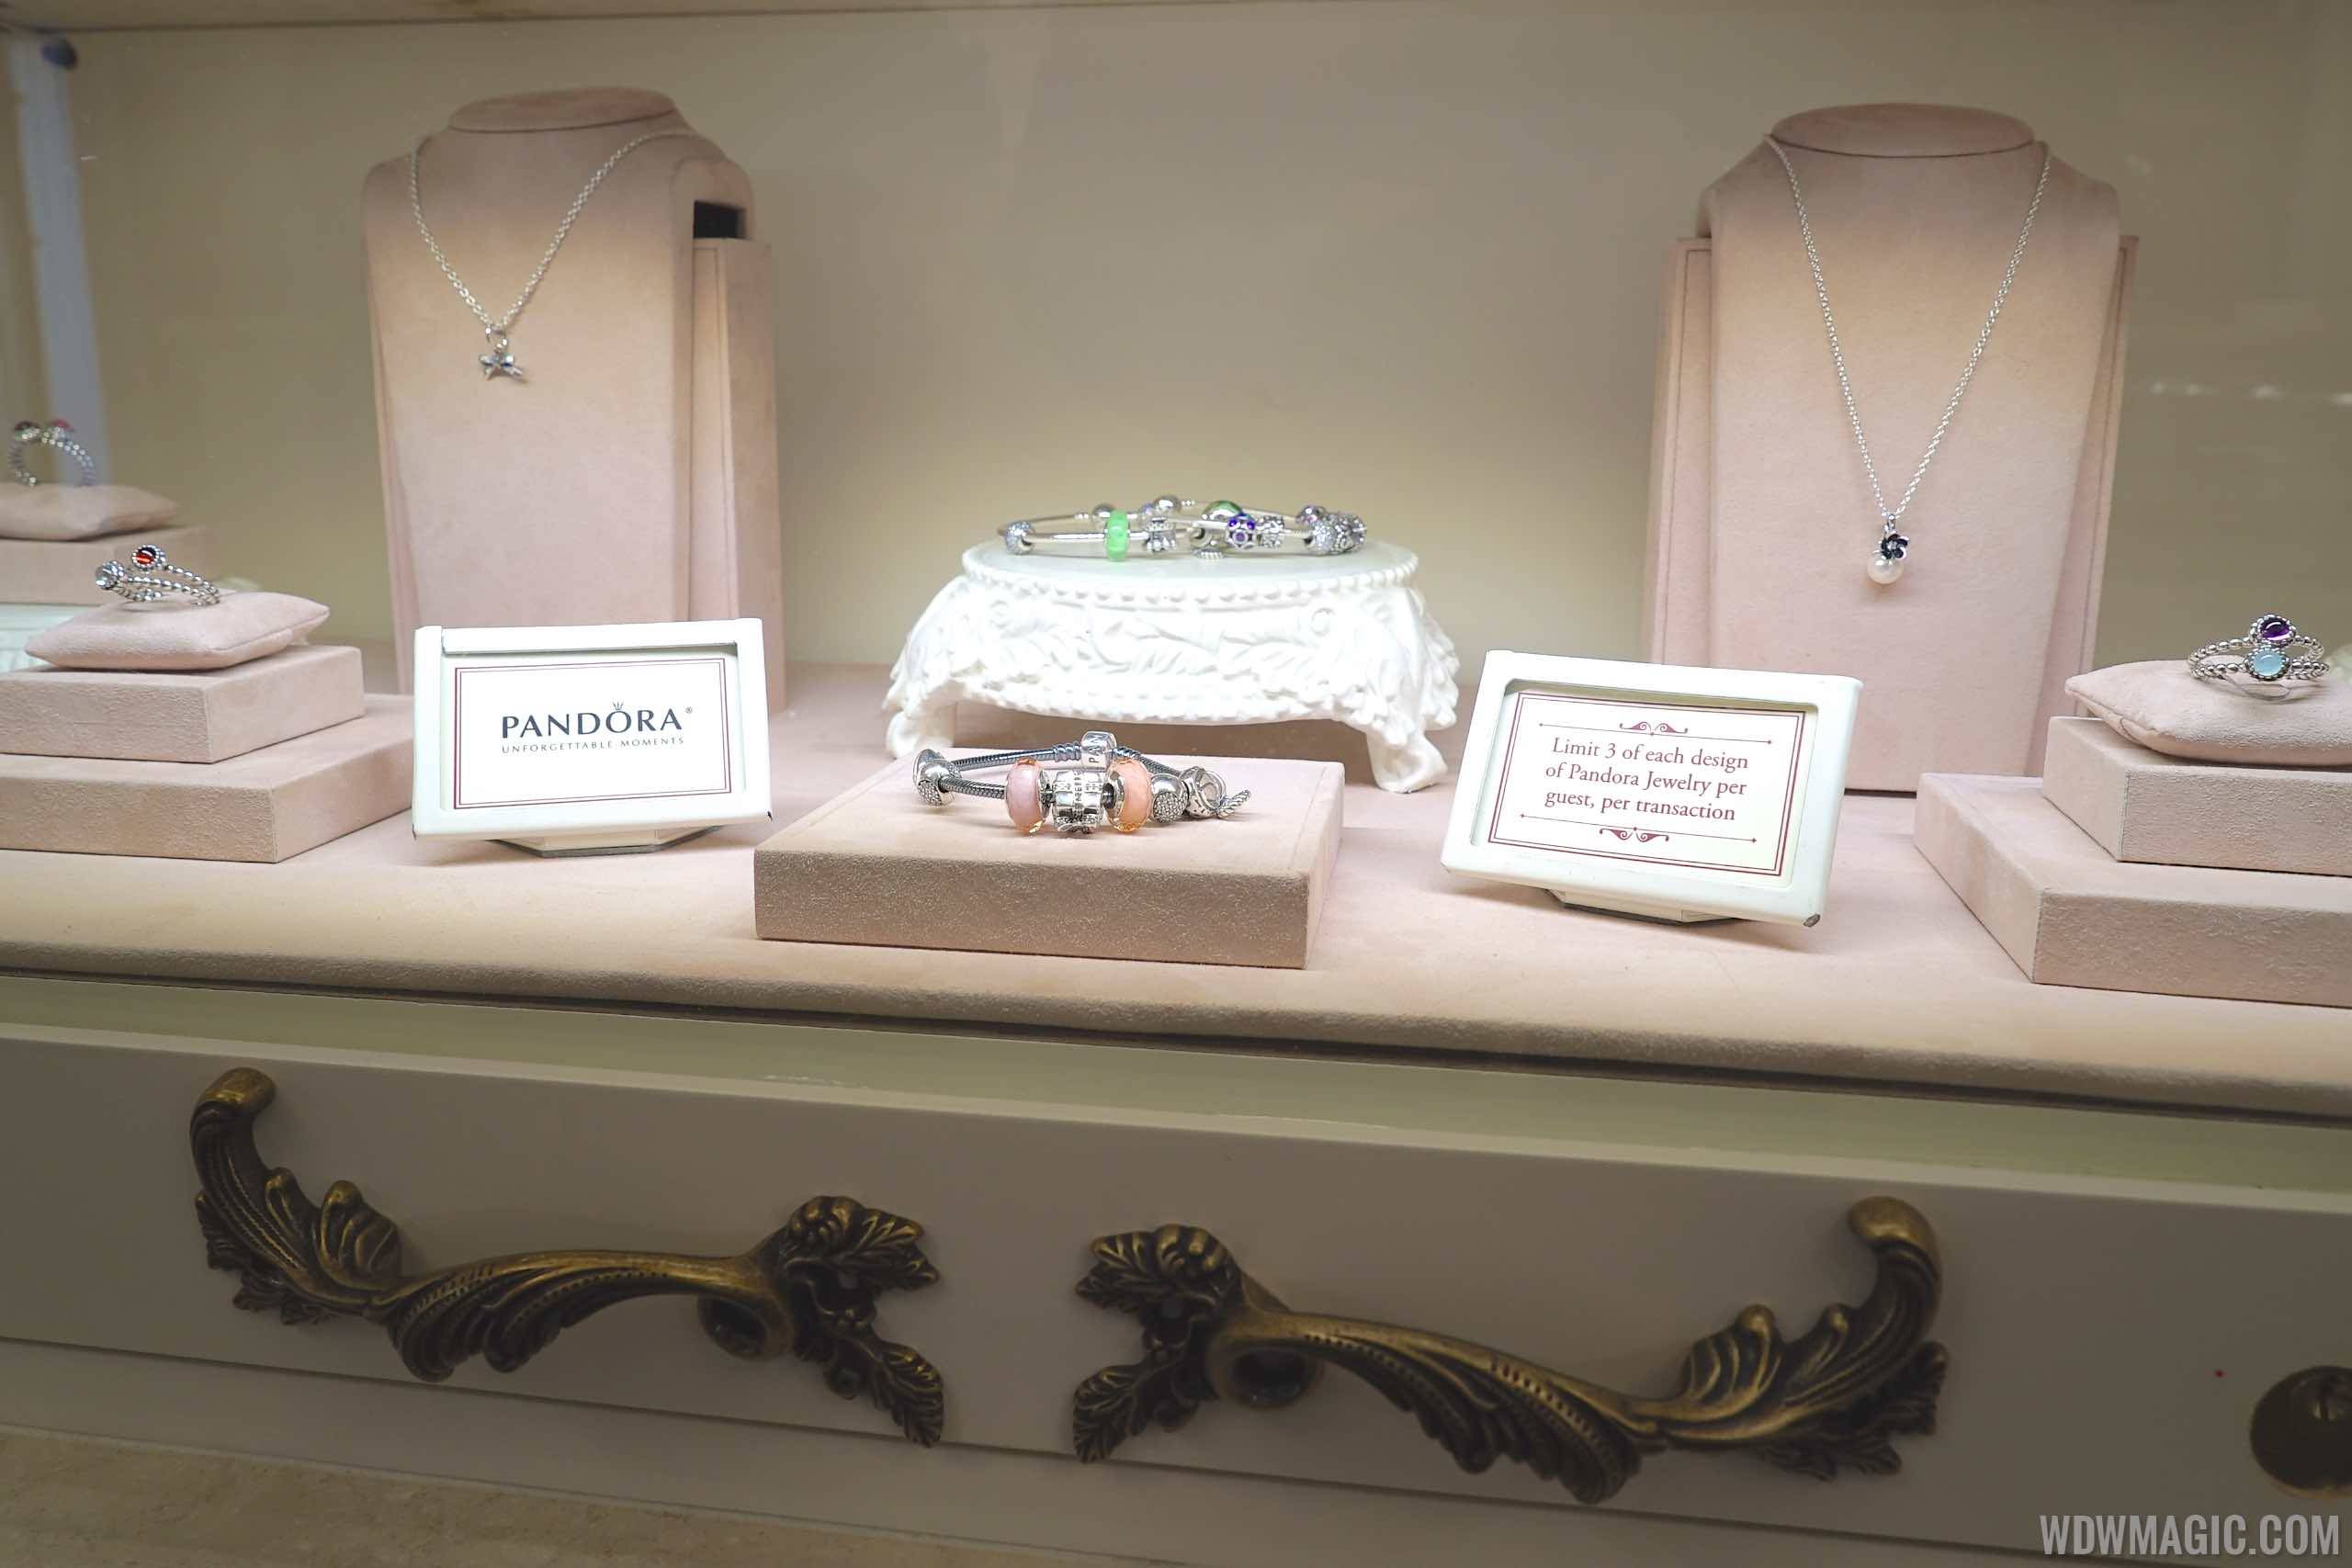 Pandora at Uptown Jewelers